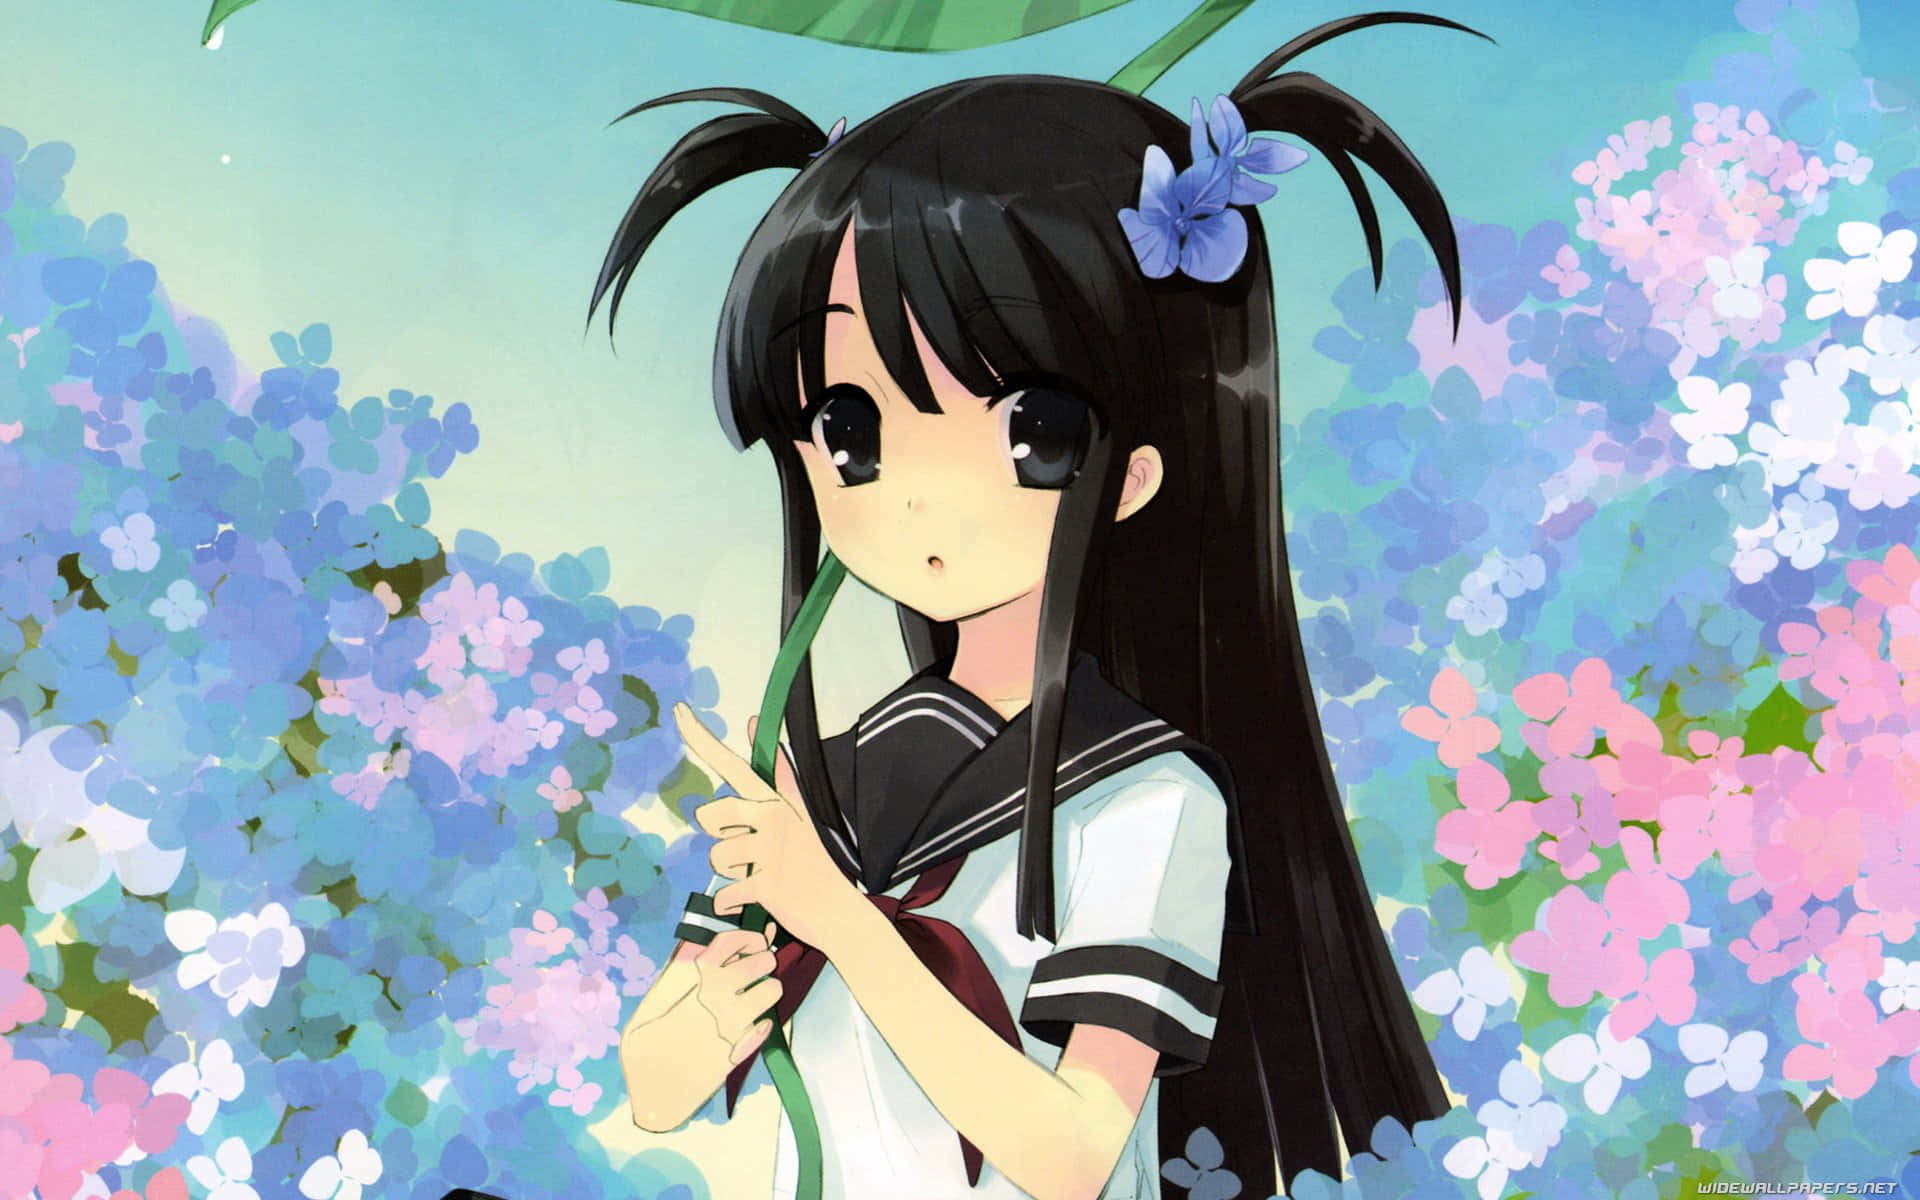 Free Cute Kawaii Anime Girl Wallpaper Downloads, [100+] Cute Kawaii Anime  Girl Wallpapers for FREE 